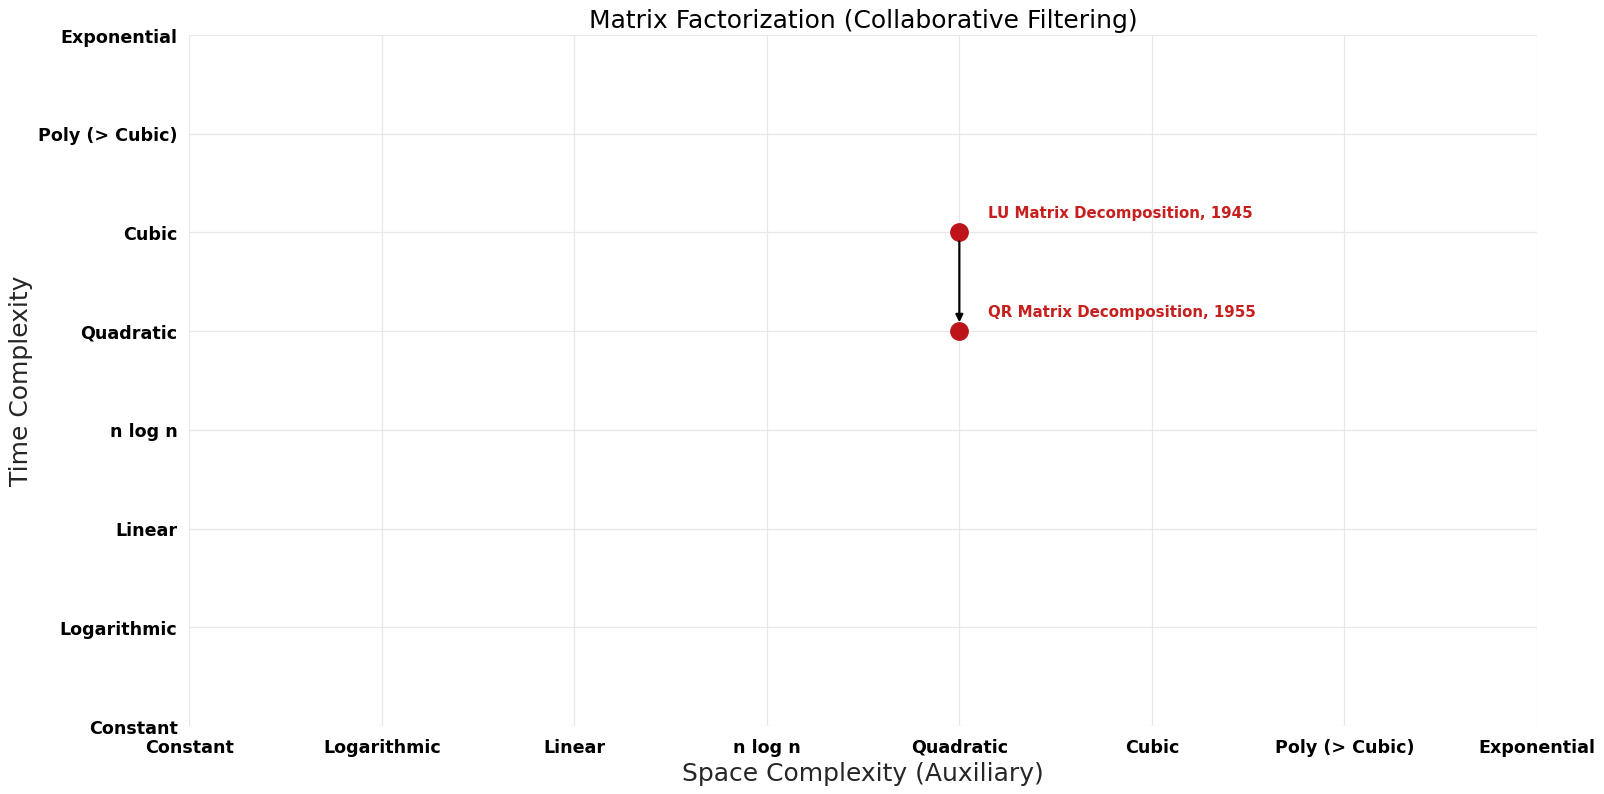 File:Collaborative Filtering - Matrix Factorization - Pareto Frontier.png